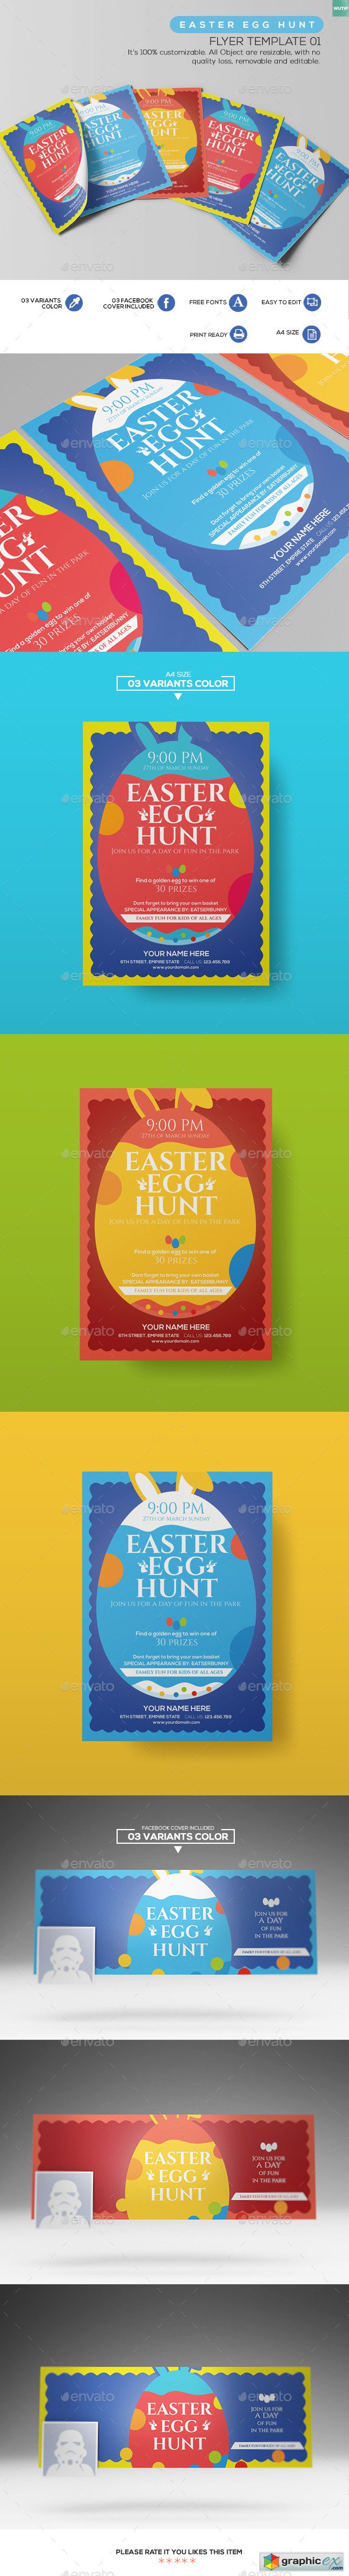 Easter Egg Hunt - Flyer Template 01